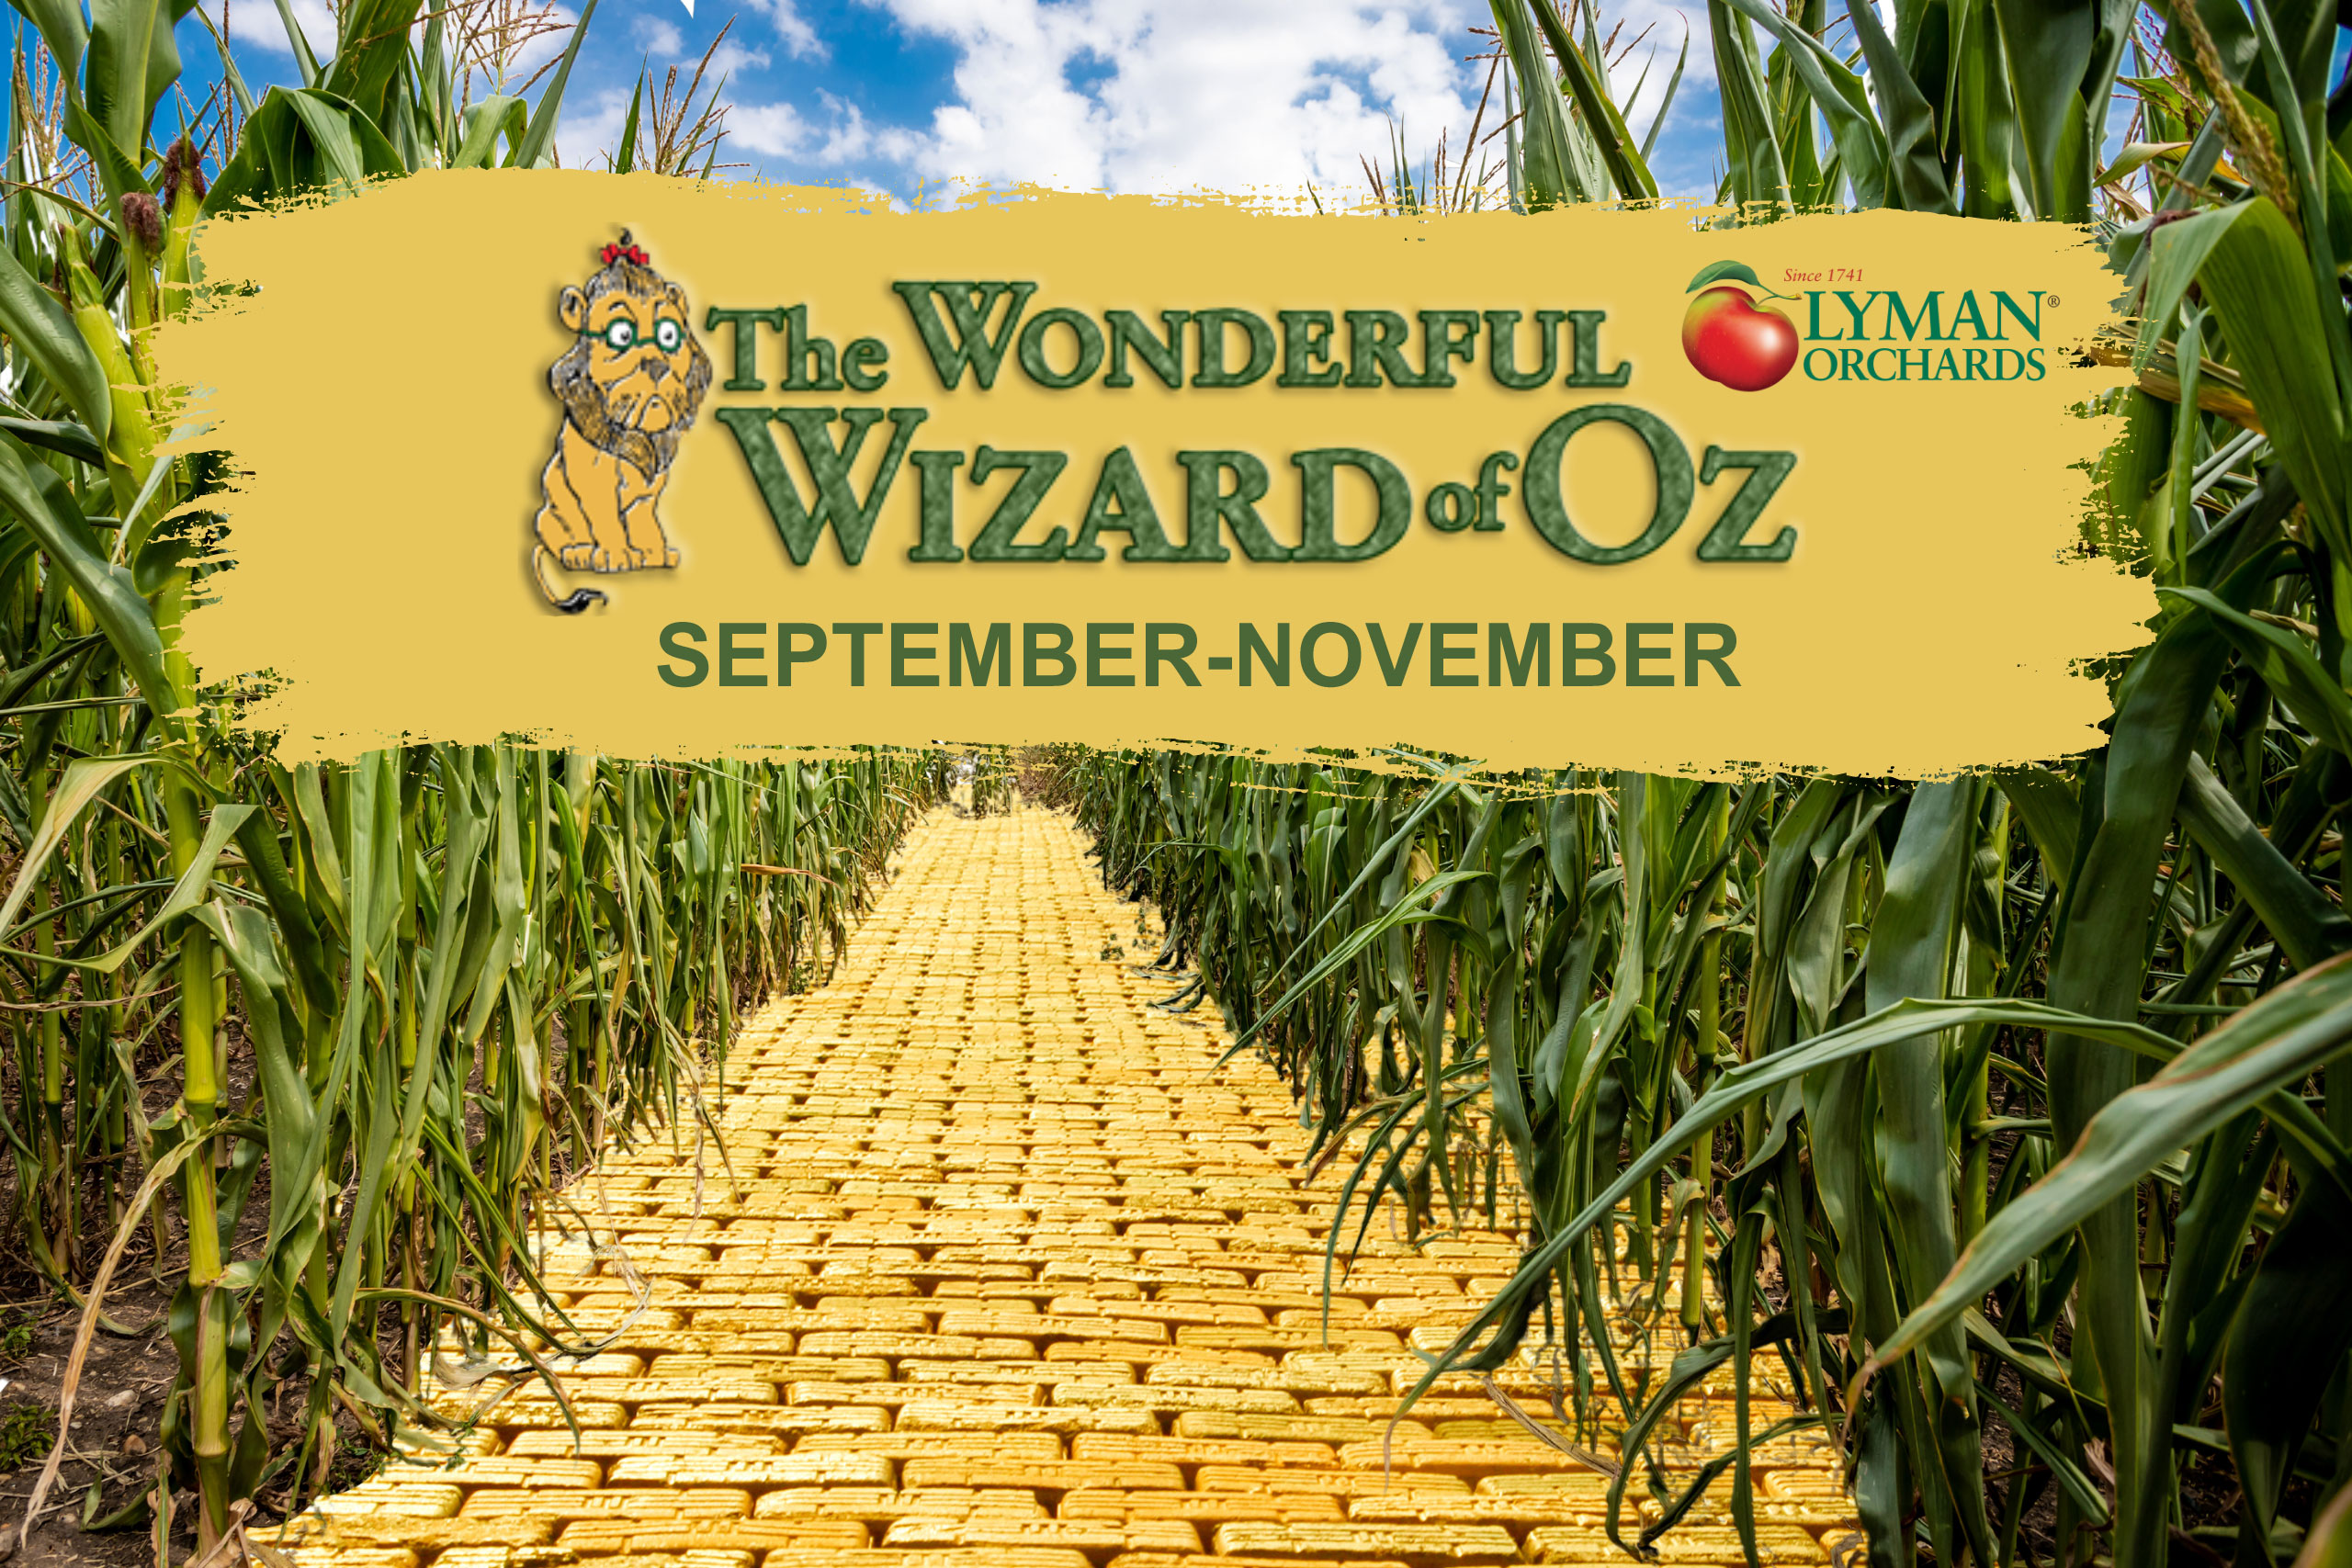 The Annual Lyman Orchards Corn Maze Open September-November